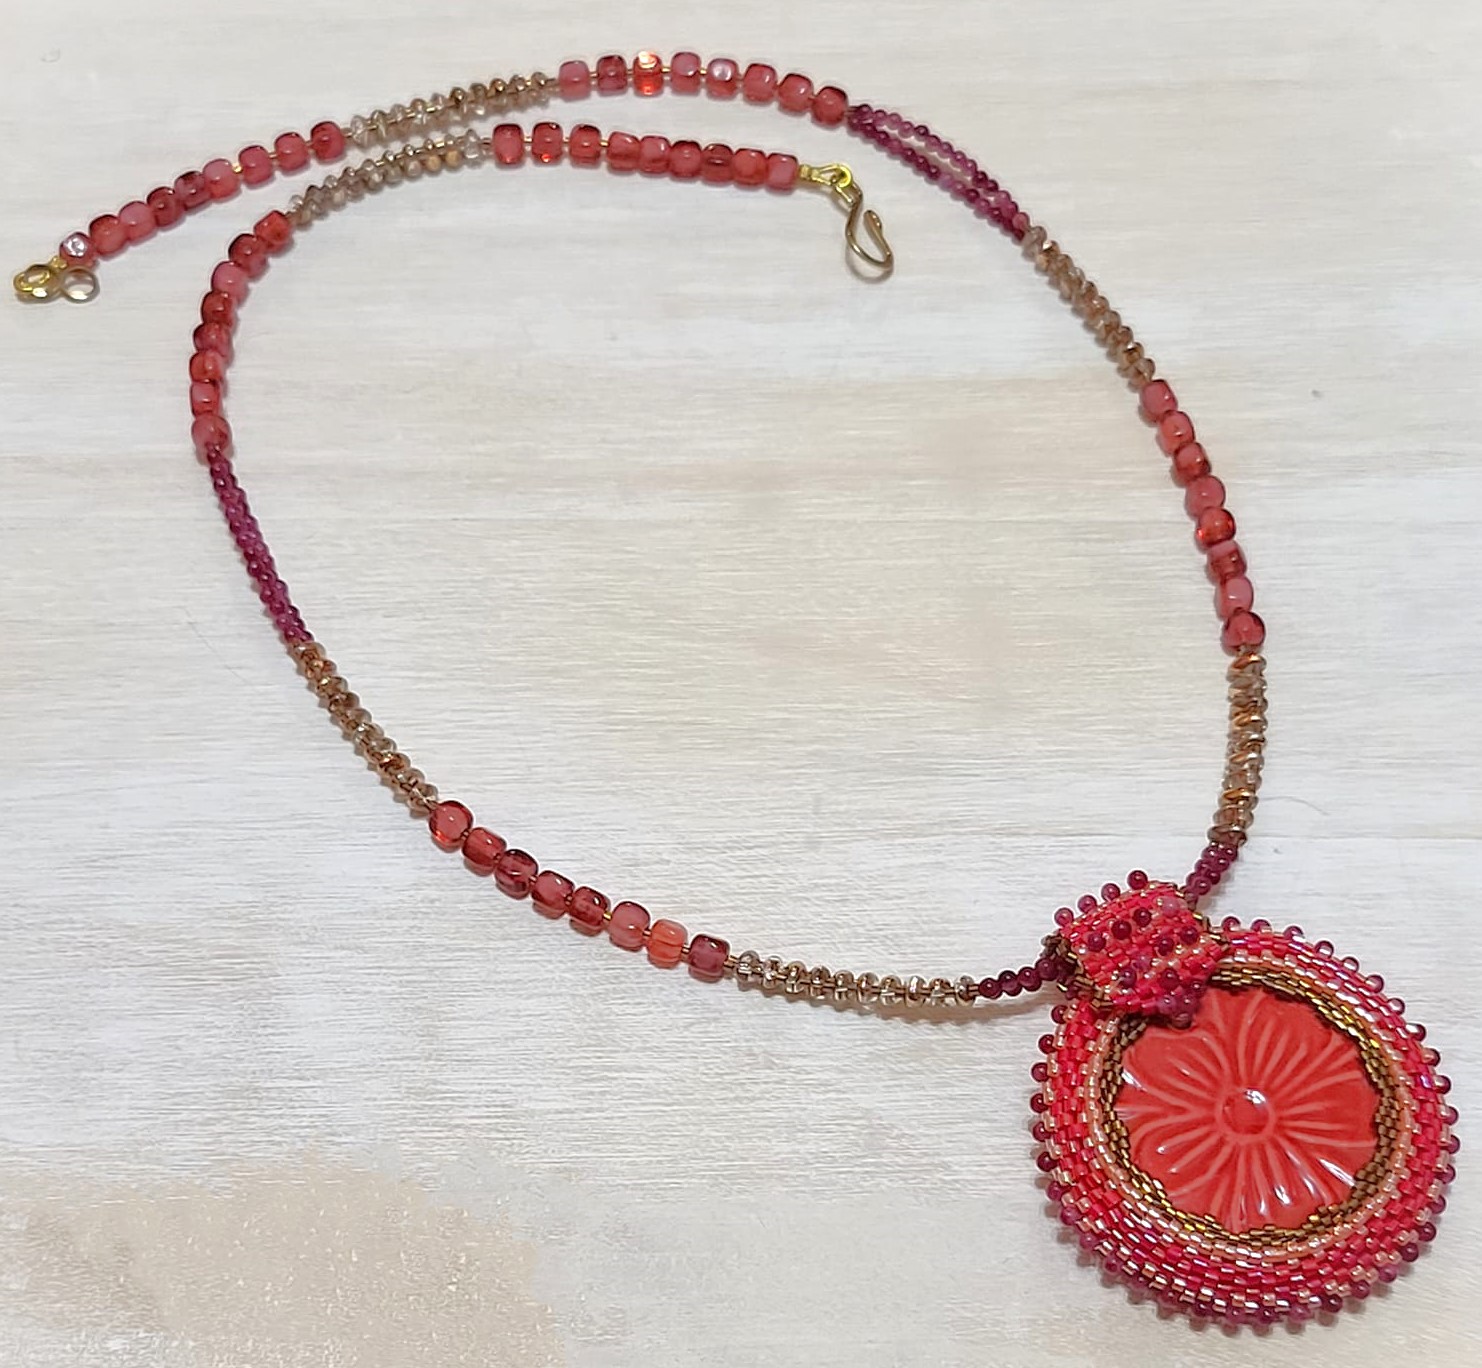 Gemstone necklace, cherry quartz with center ceramic medalion